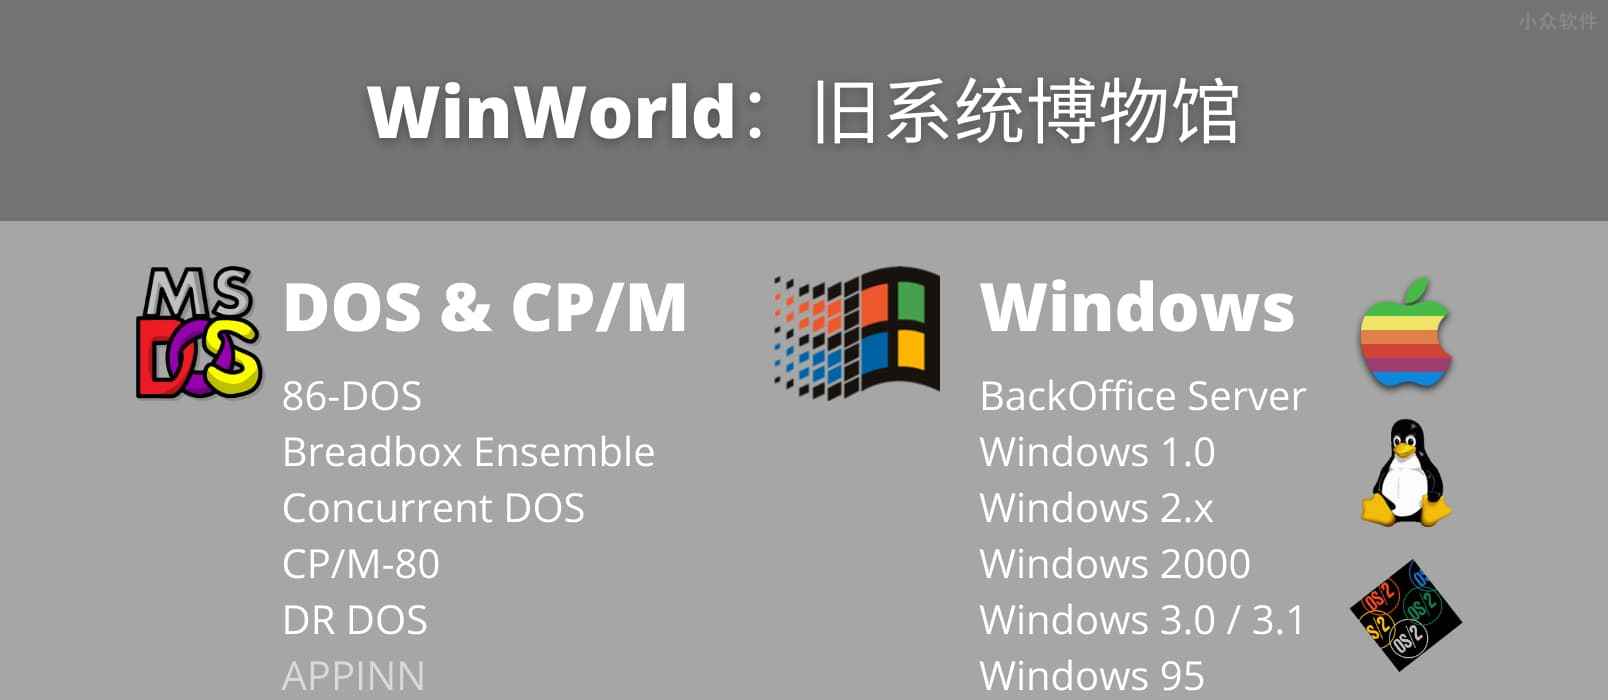 WinWorld – 从 DOS 到 Win 2000，旧系统博物馆，还有同样过时的海量软件、游戏